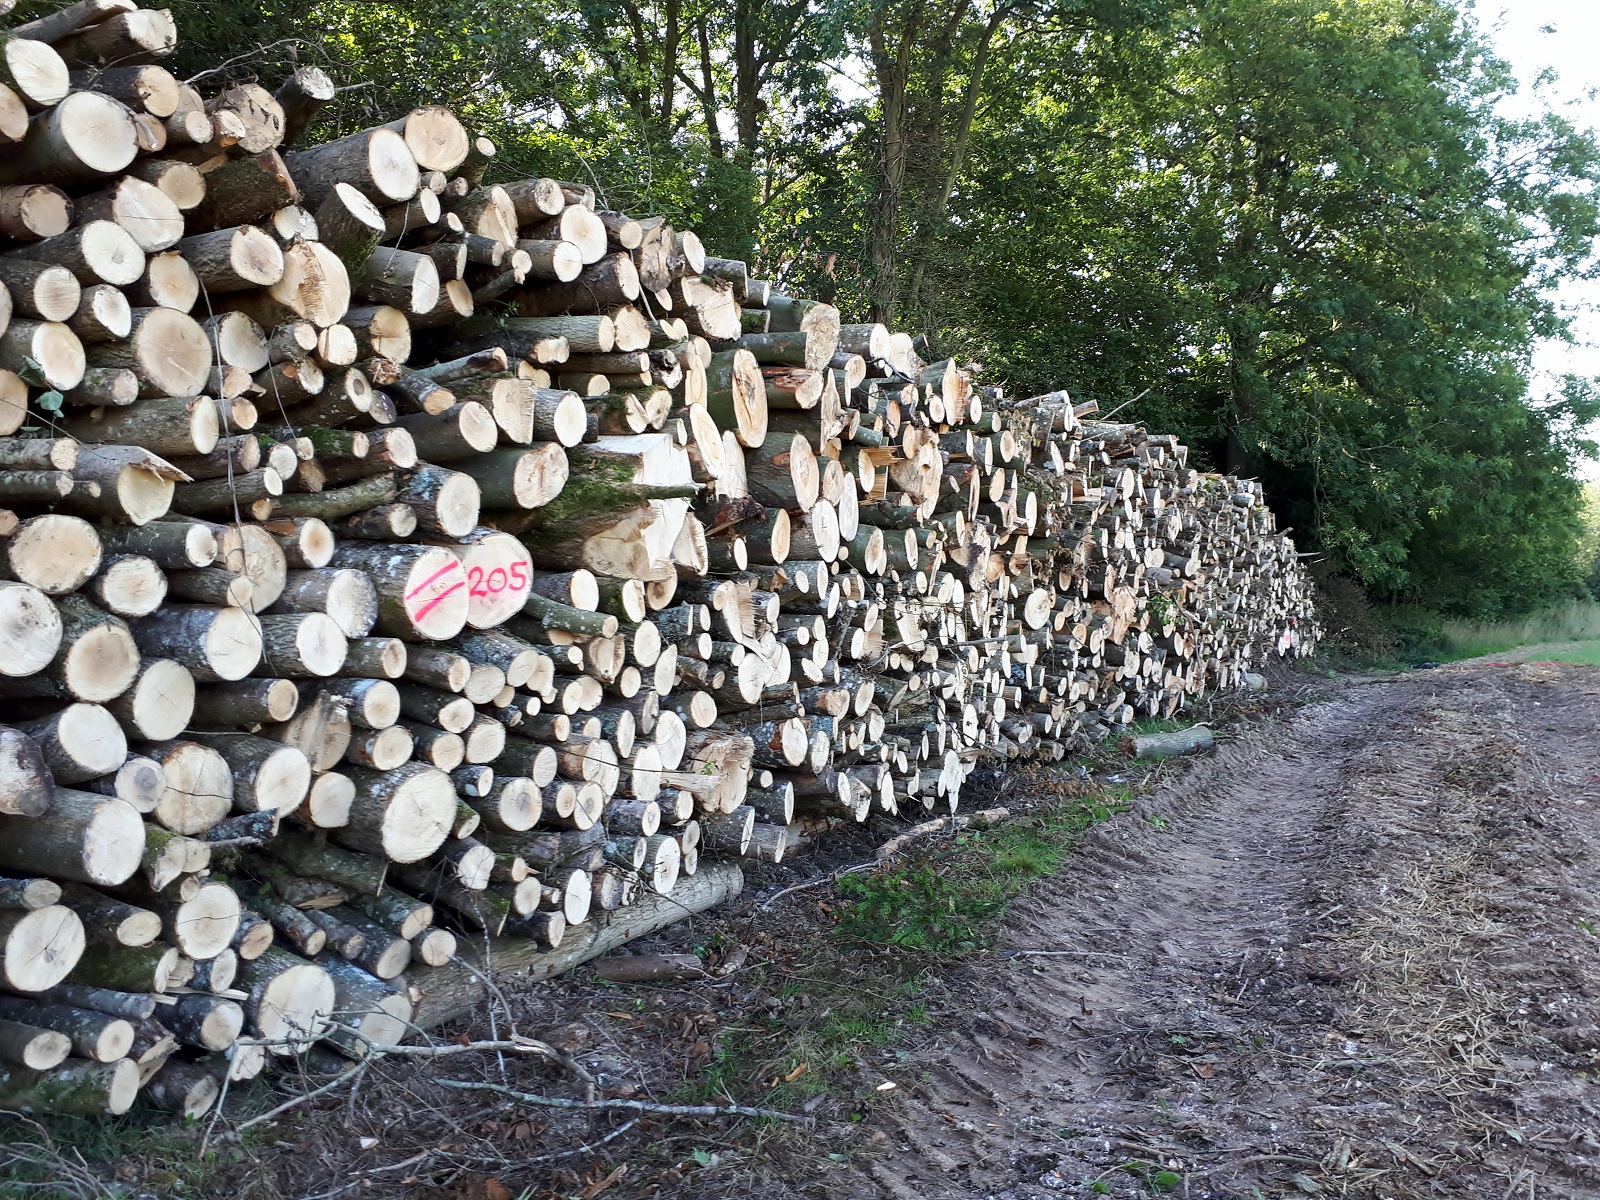 120kg Includes Free kindling. Hardwood Firewood Logs Sustainably Sourced Seasoned British Beech/Oak